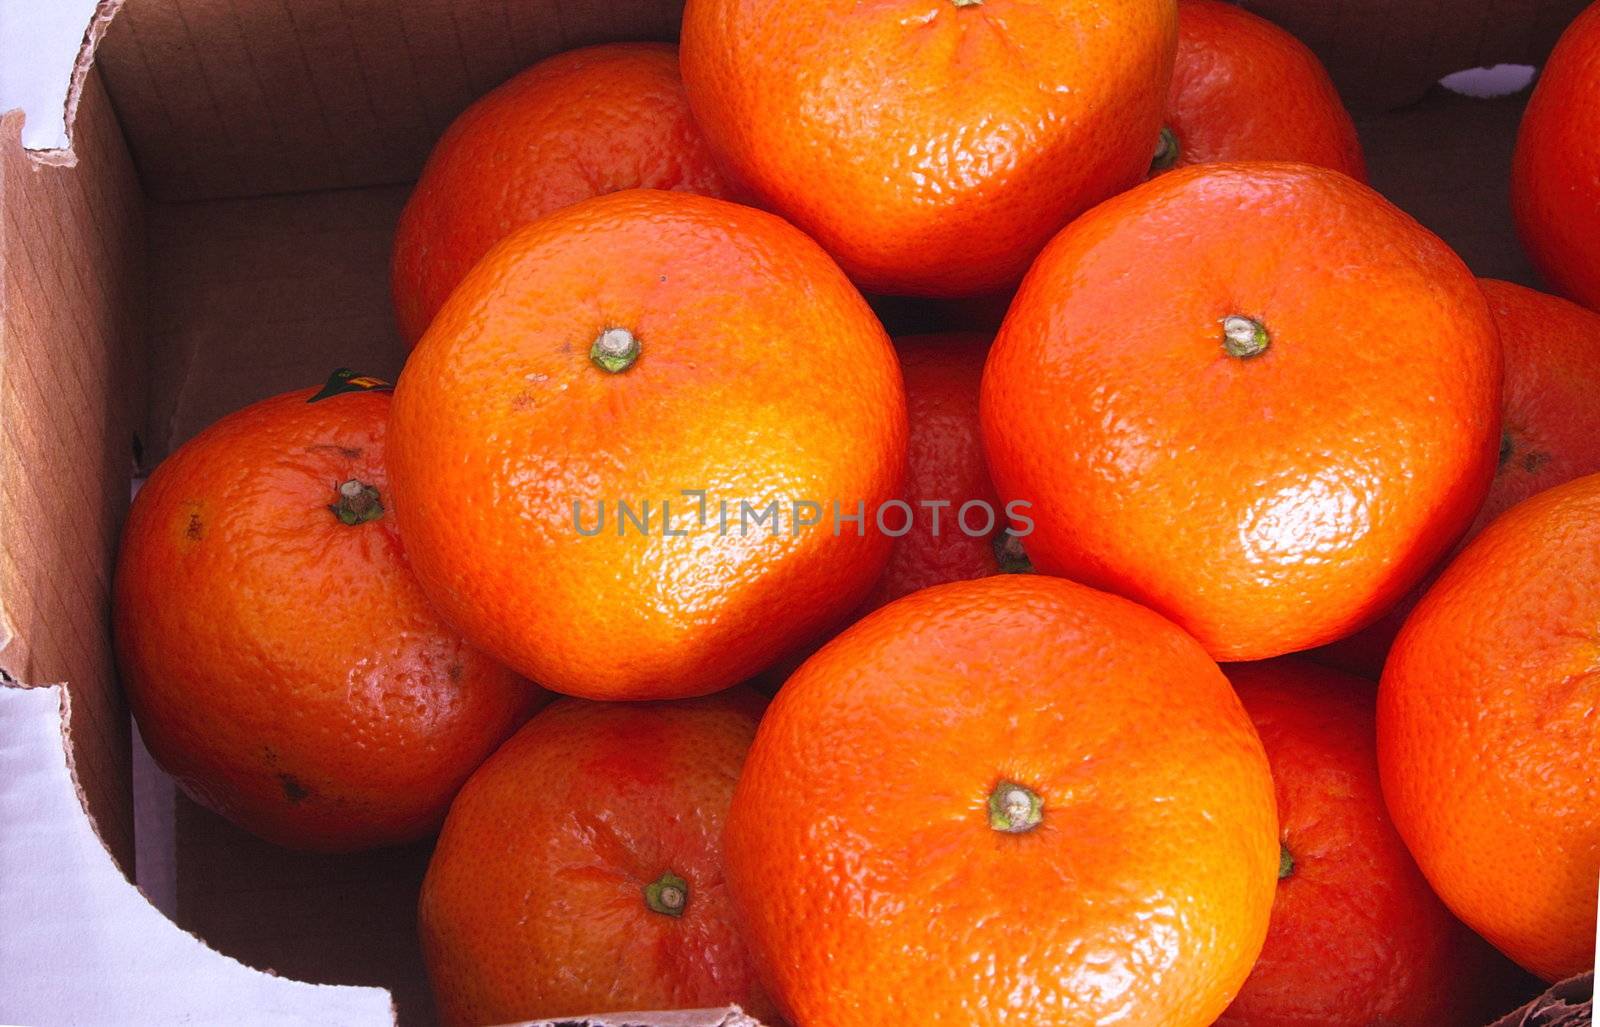 oranges in a box by leafy